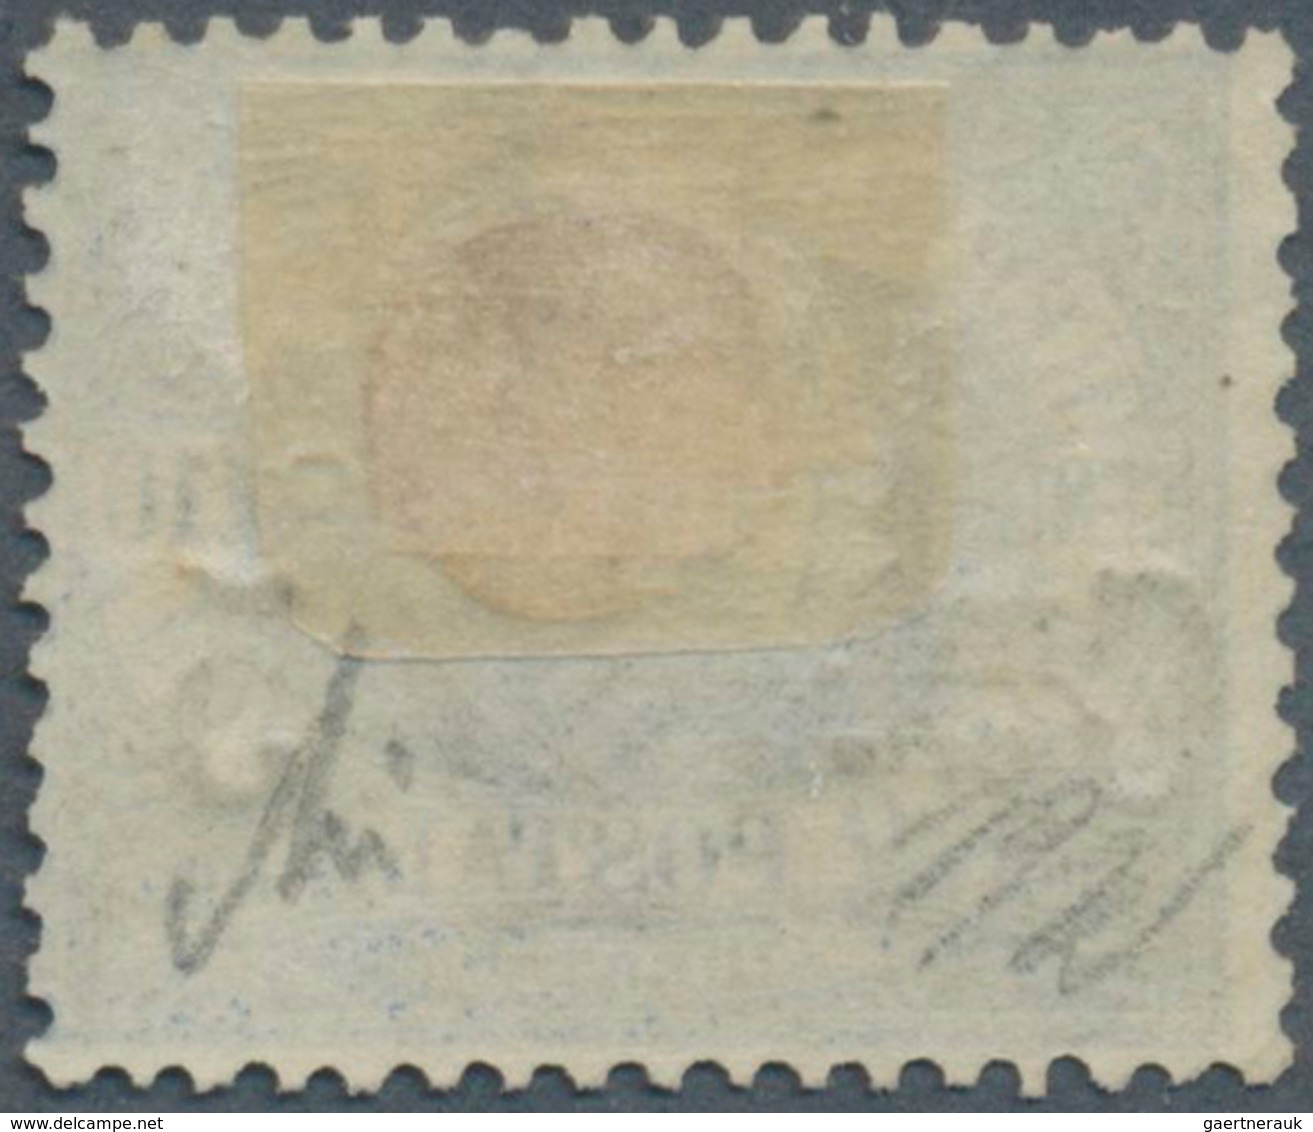 01069 San Marino: 1892, "Cmi 5" On 10 C Ultramarin, Unused With Original Gum In Perfect Condition, Signed - Unused Stamps